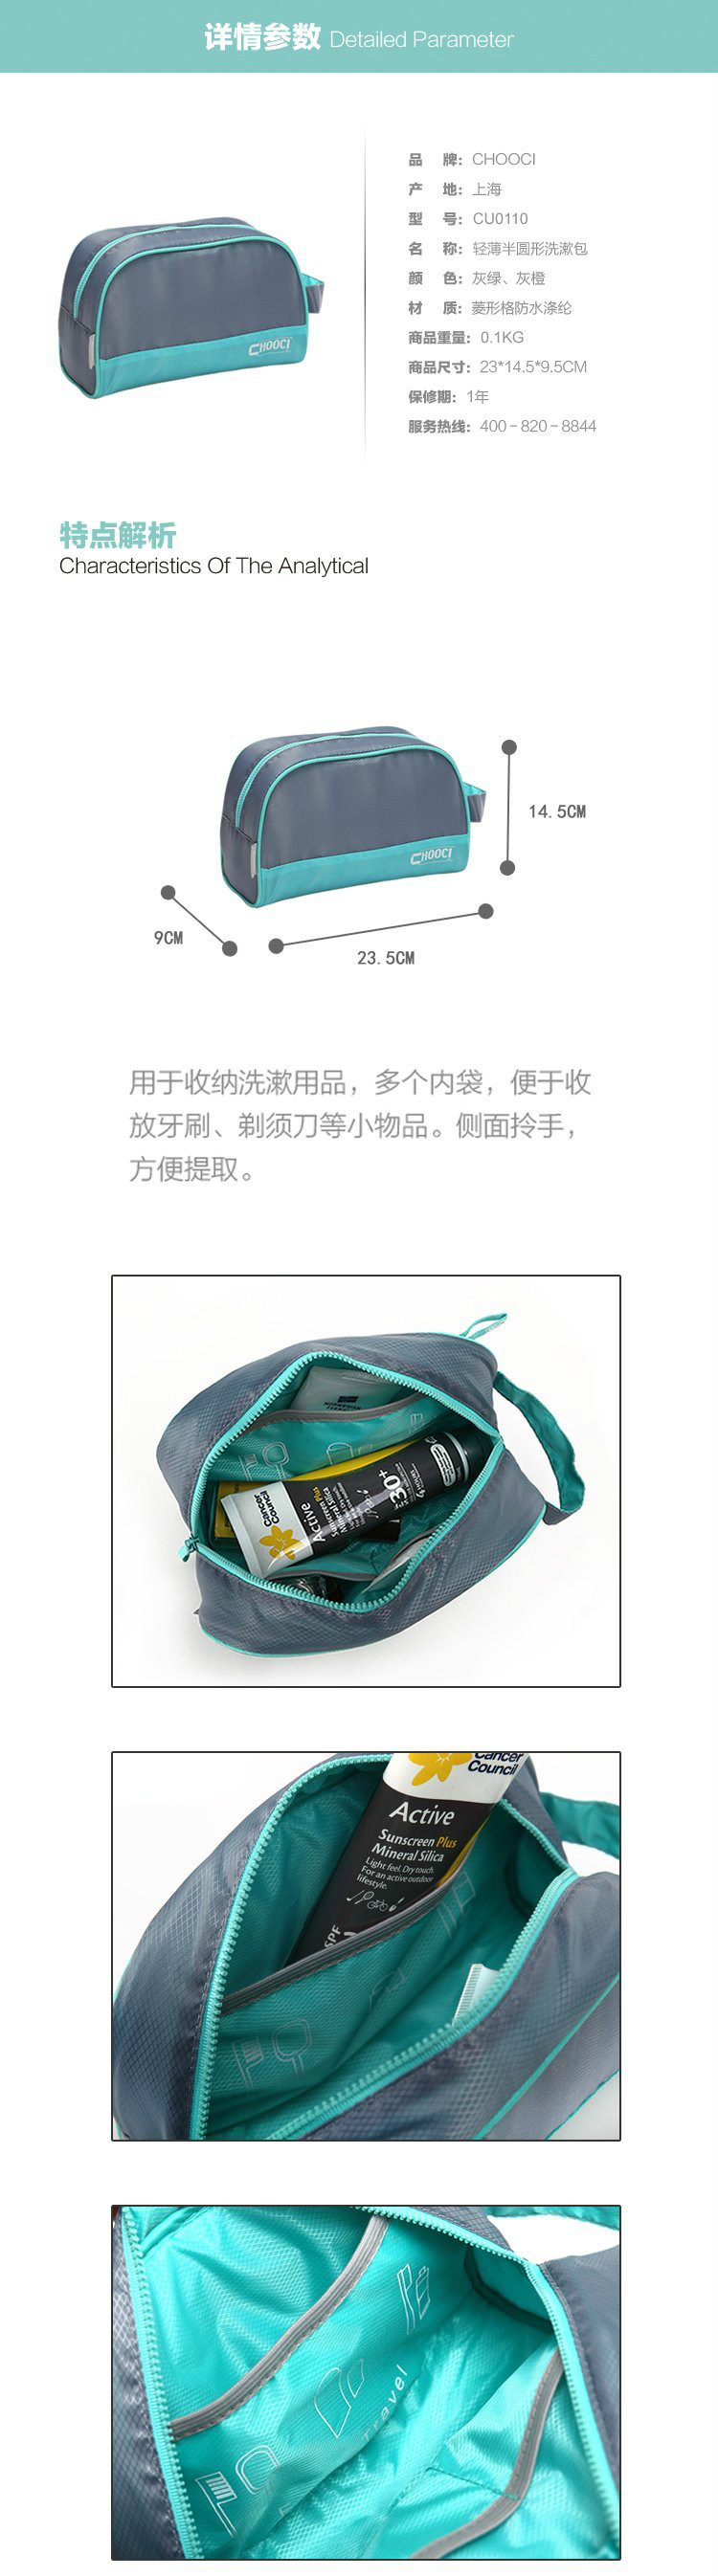 CHOOCI半圆形洗漱包手包 旅行多用途化妆收纳袋CU0110